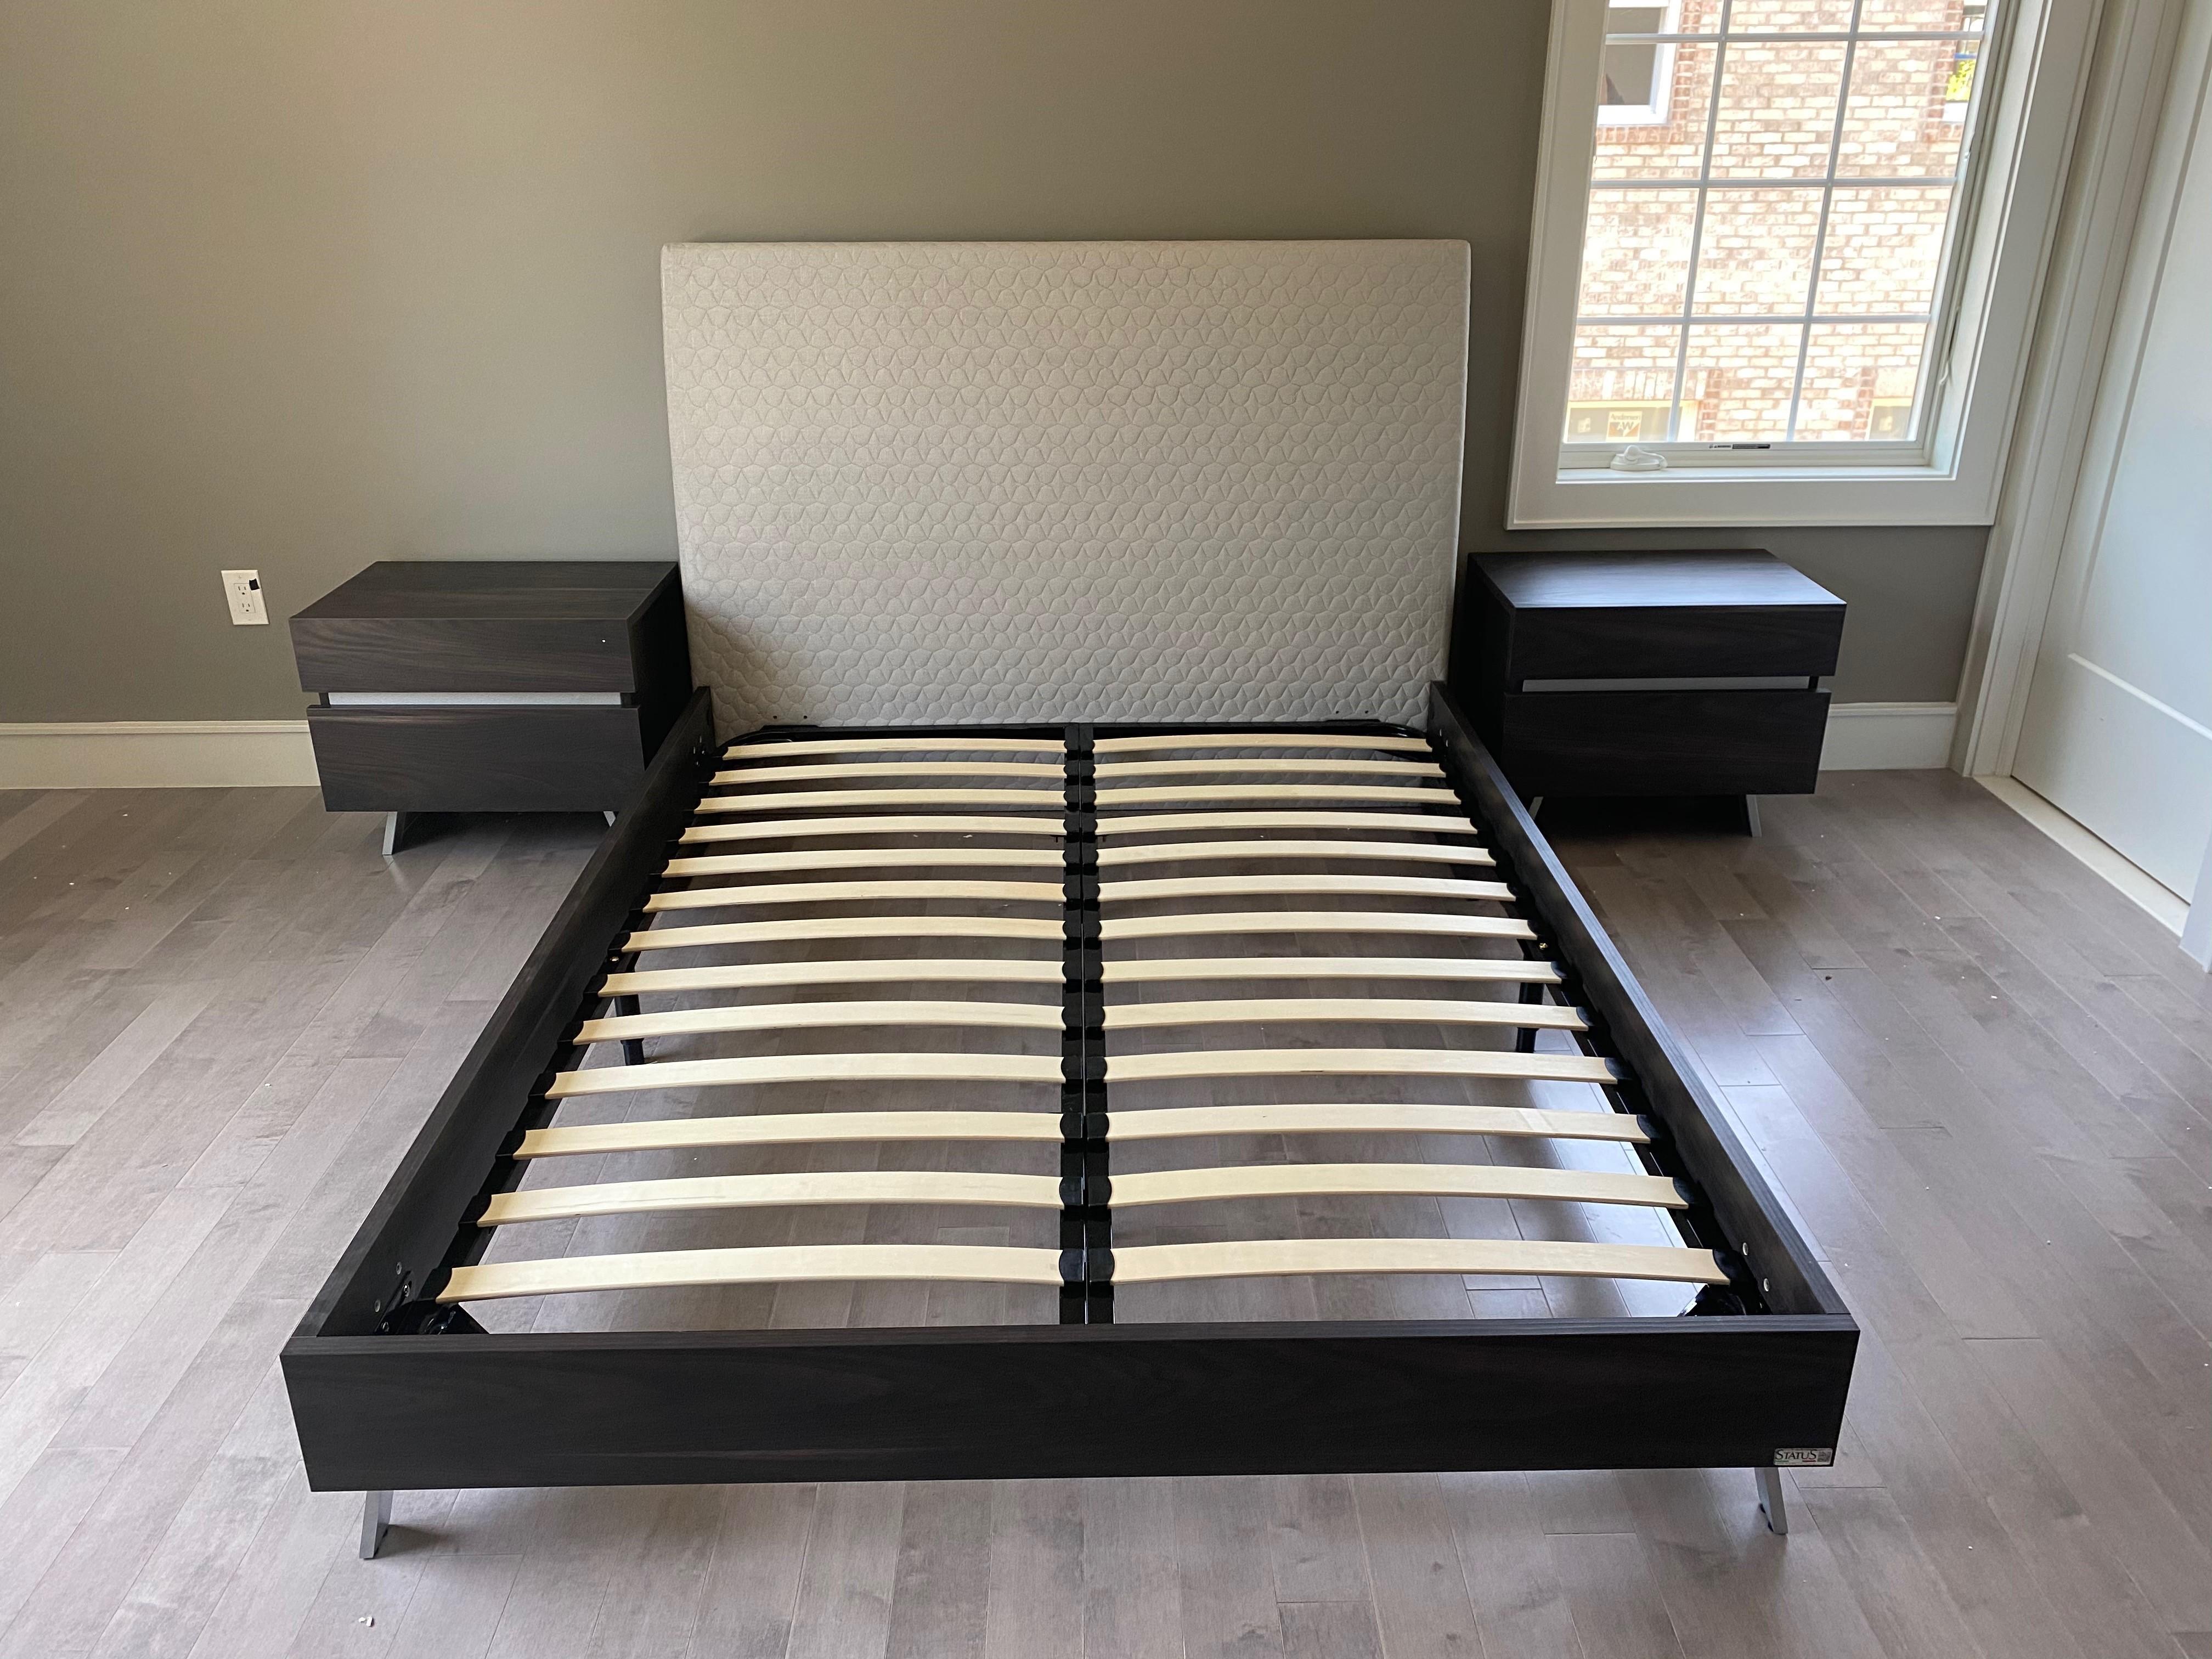 

    
New Star Platform Bedroom Set
